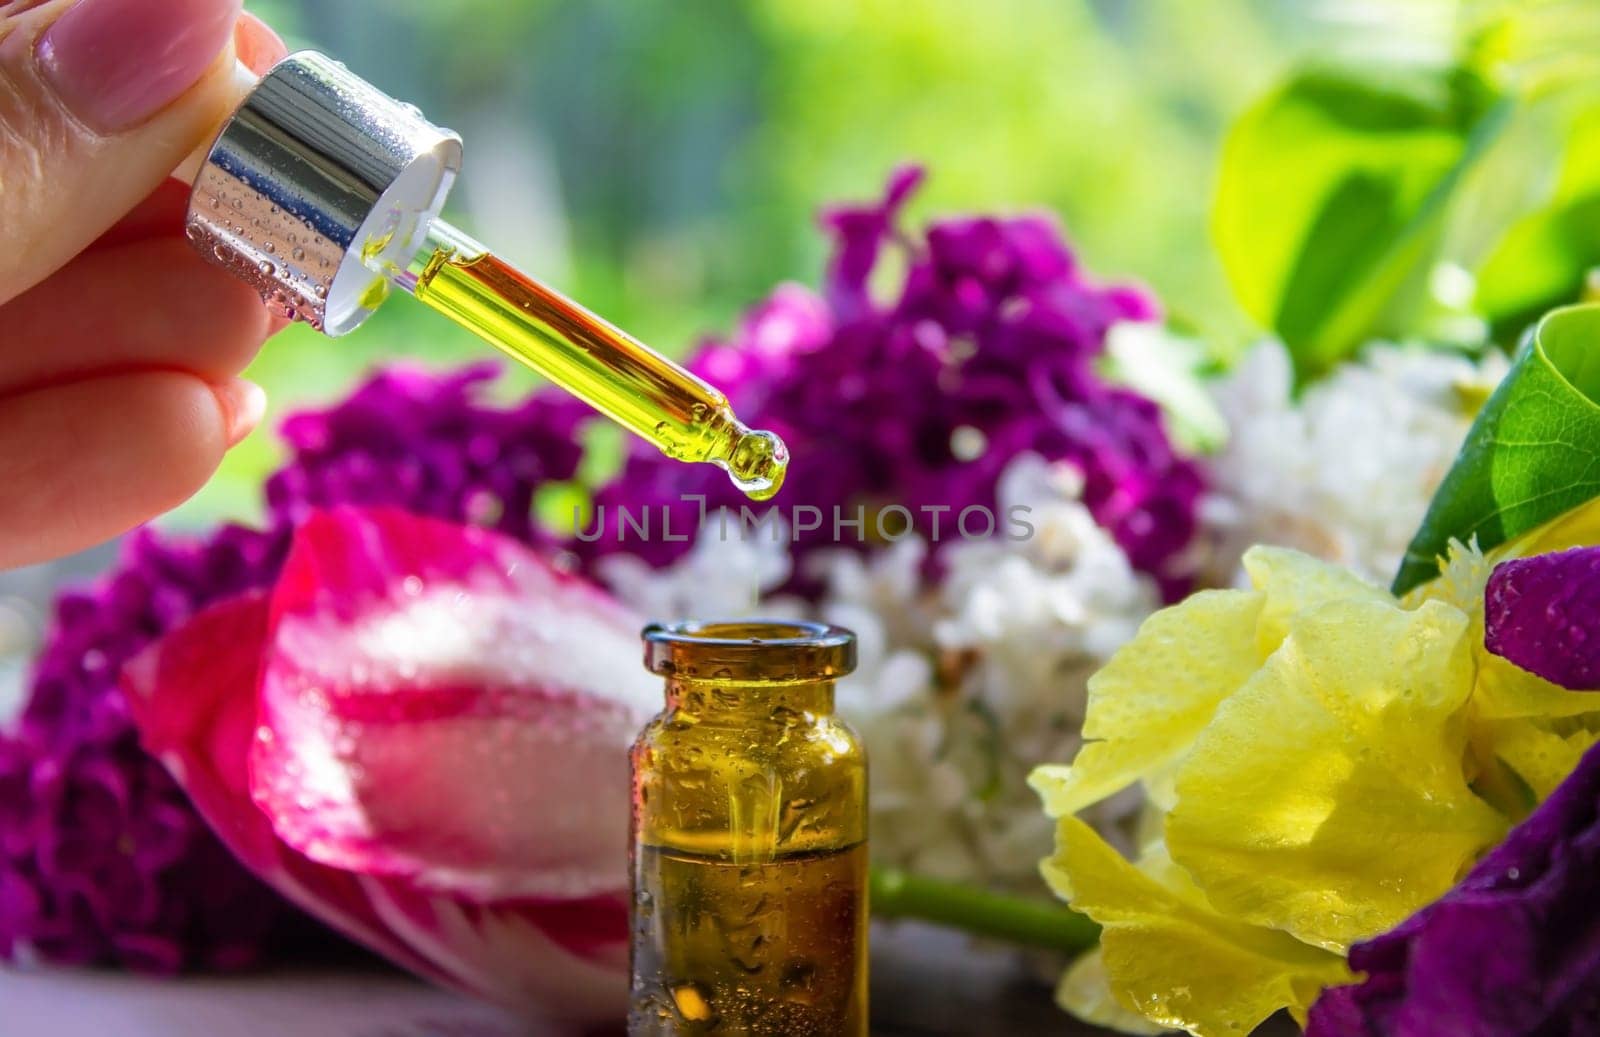 essential oils of various flowers.